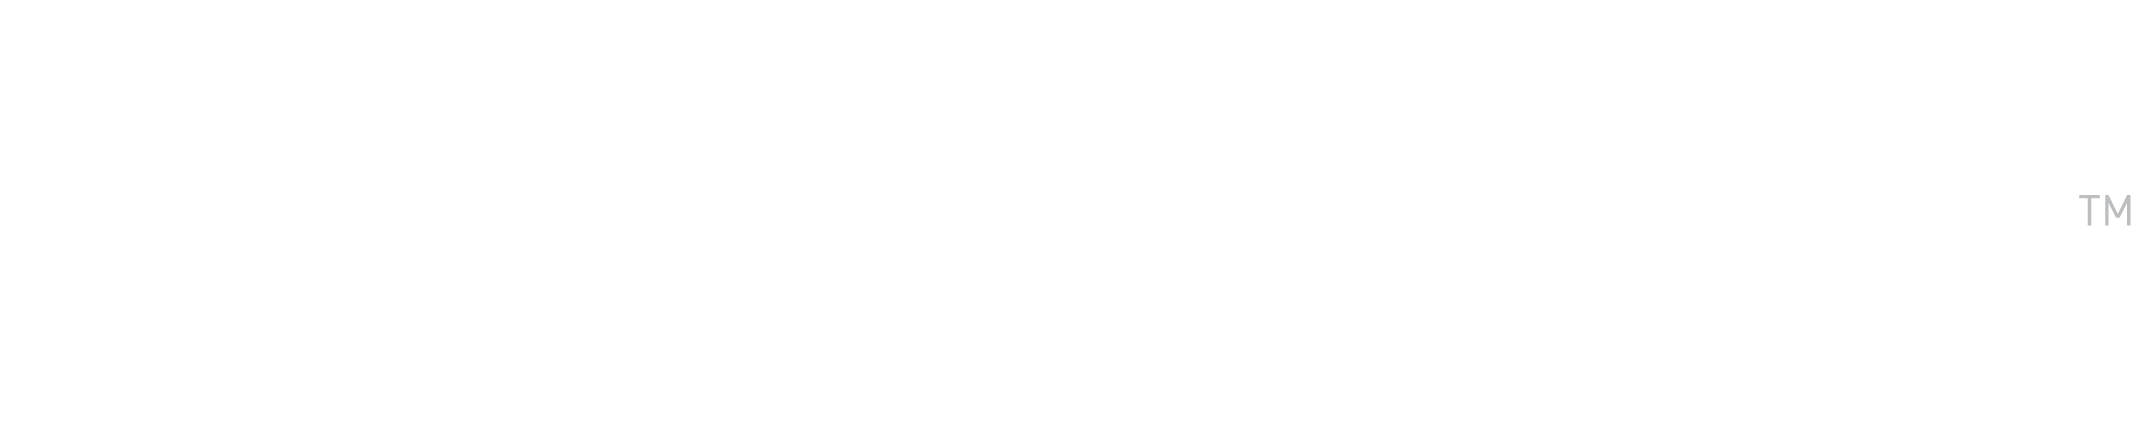 emPerform-logo-whte